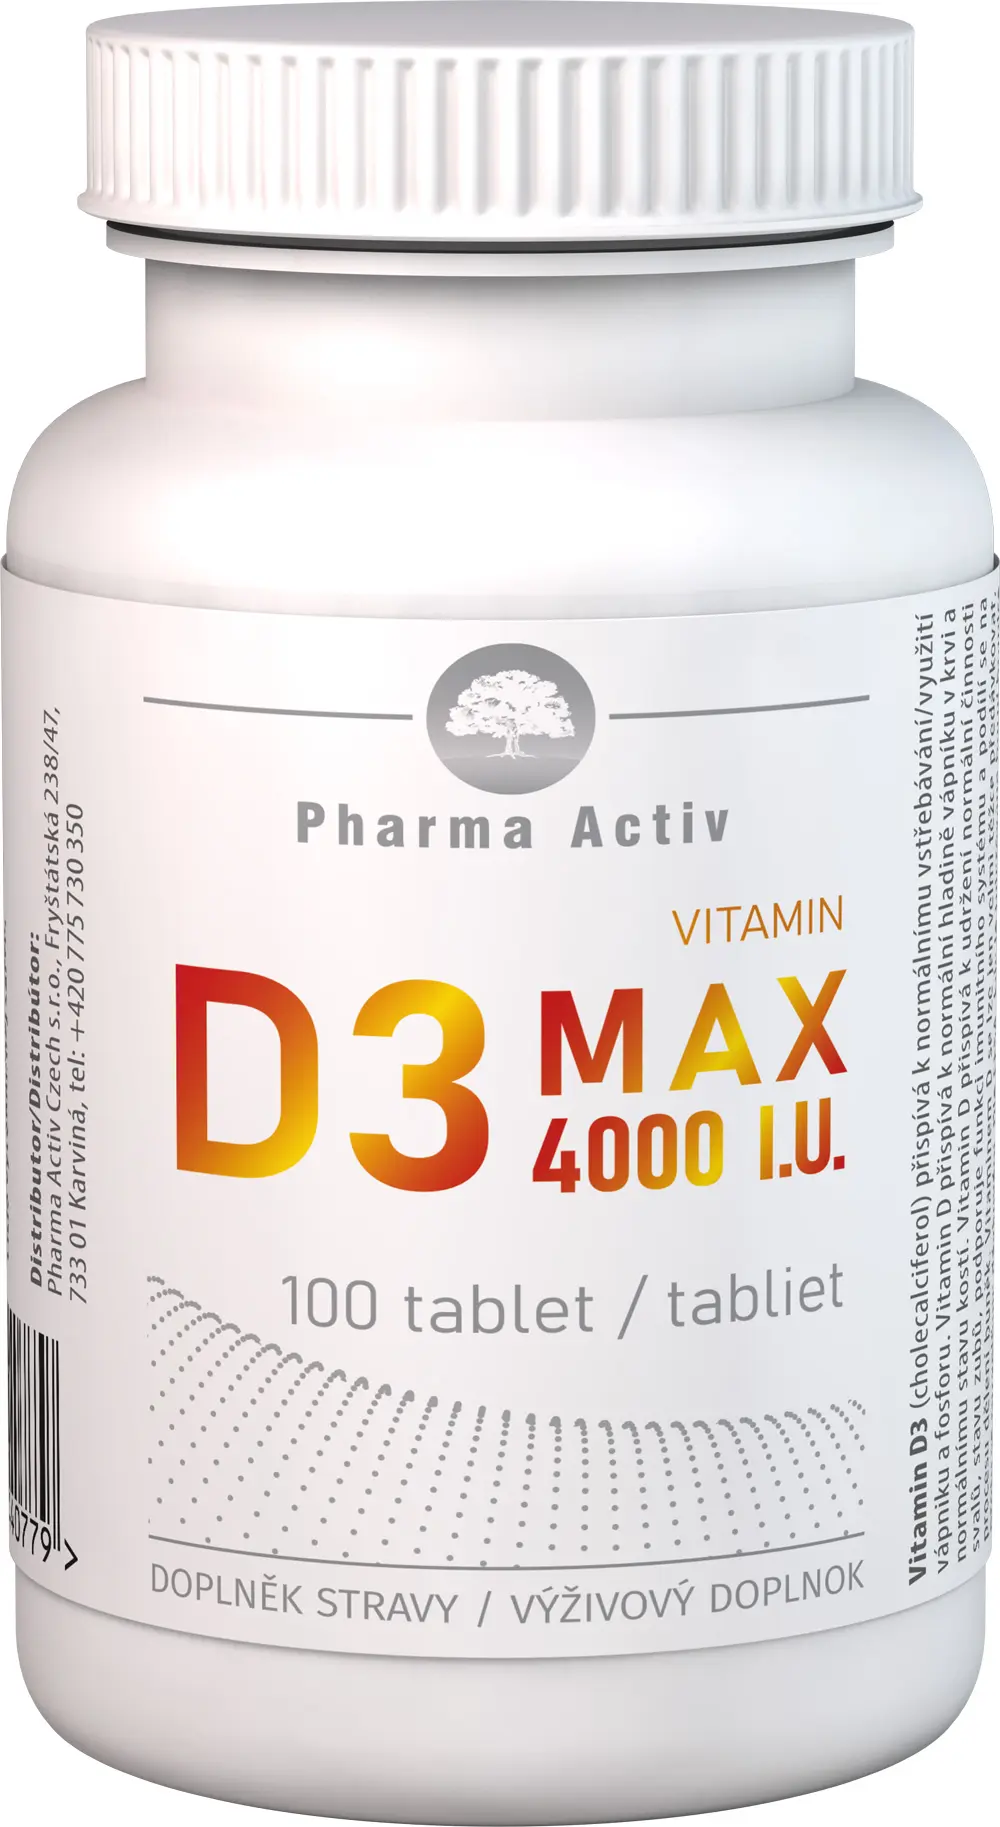 Pharma Activ Czech Vitamin D3 MAX 4000 I.U. 100 tablet